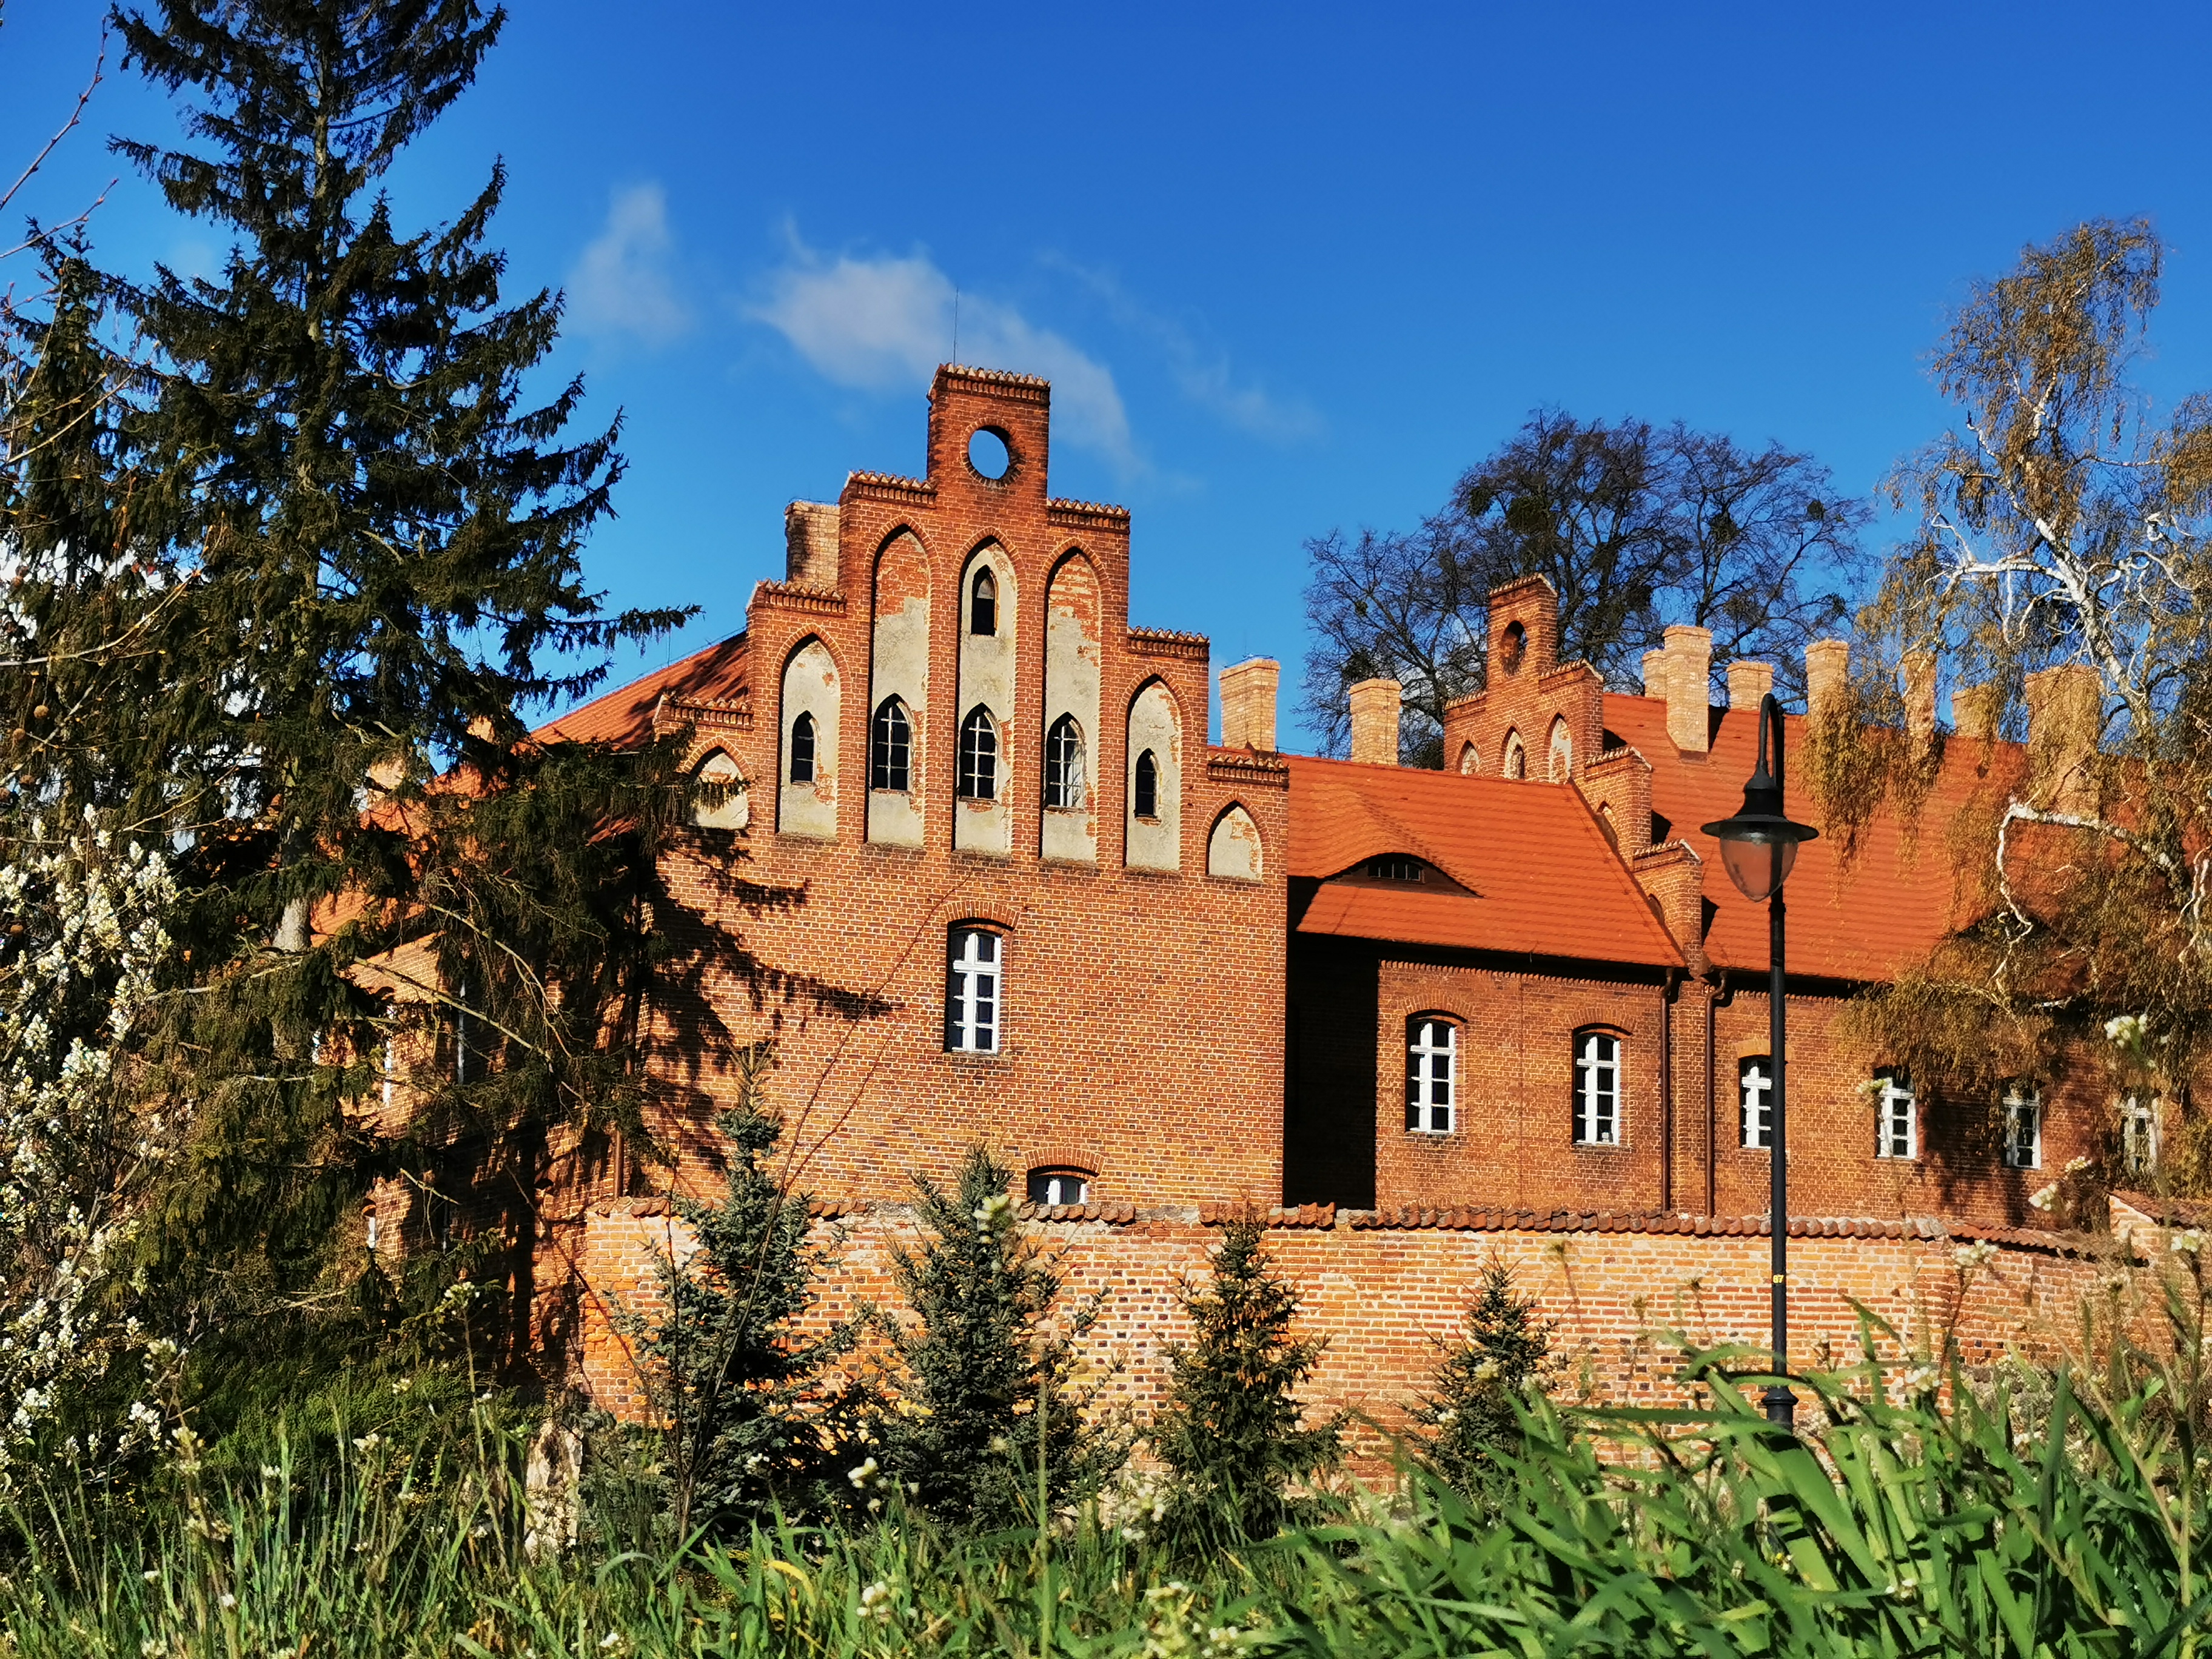 Zamek w Sztumie fot. P. Krupa